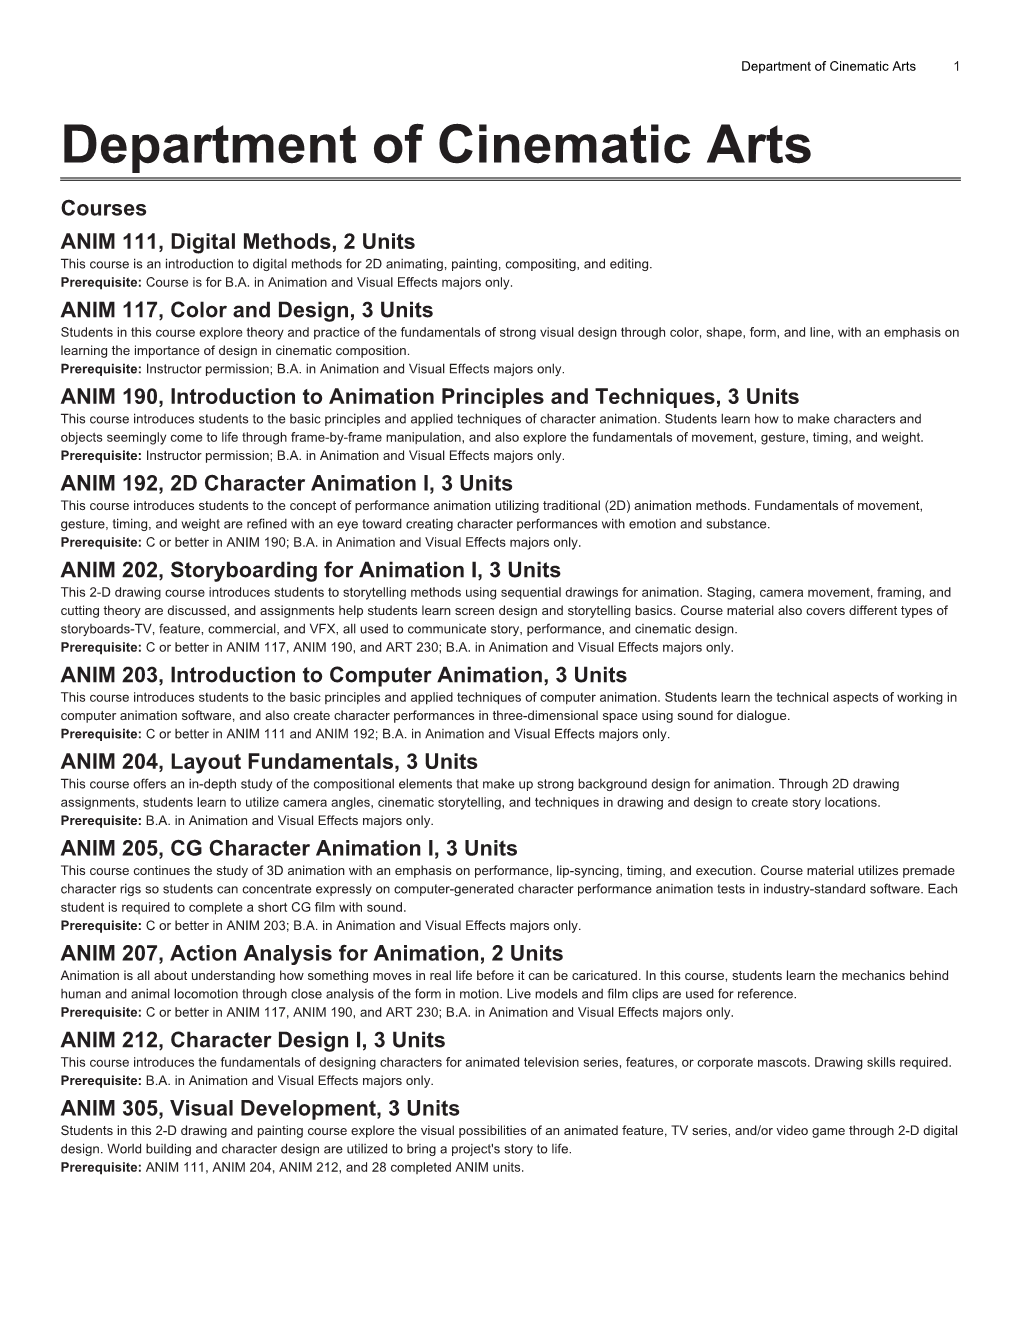 Department of Cinematic Arts 1 Department of Cinematic Arts